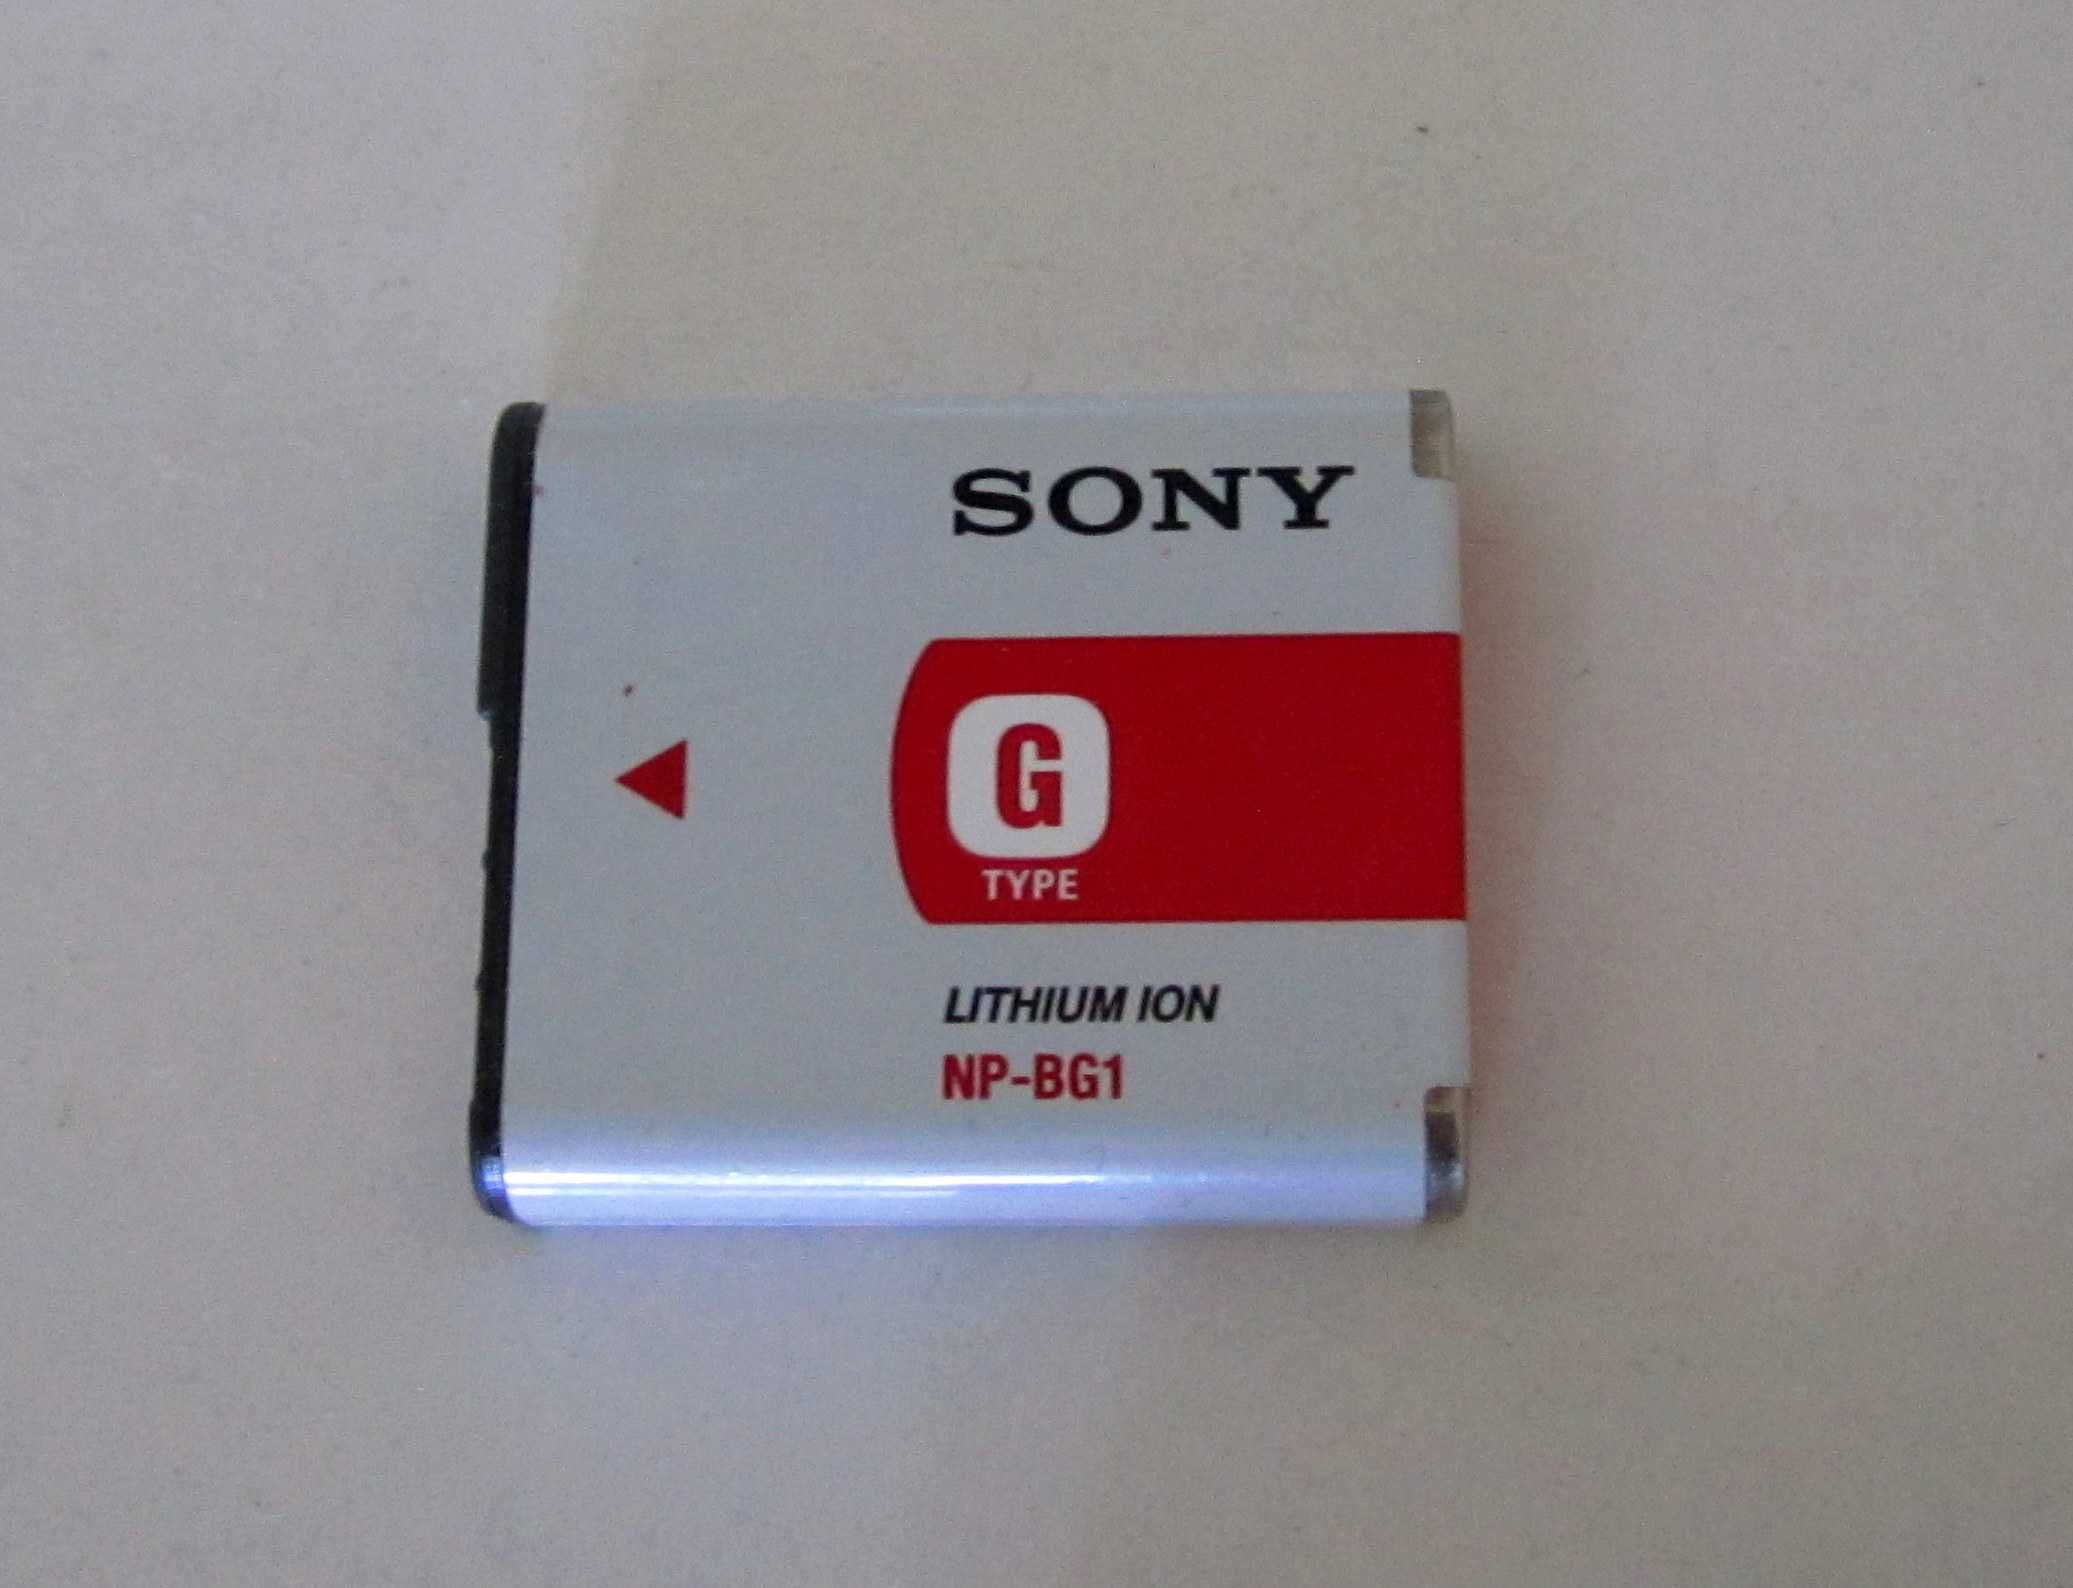 Aparat kompaktowy Sony h9